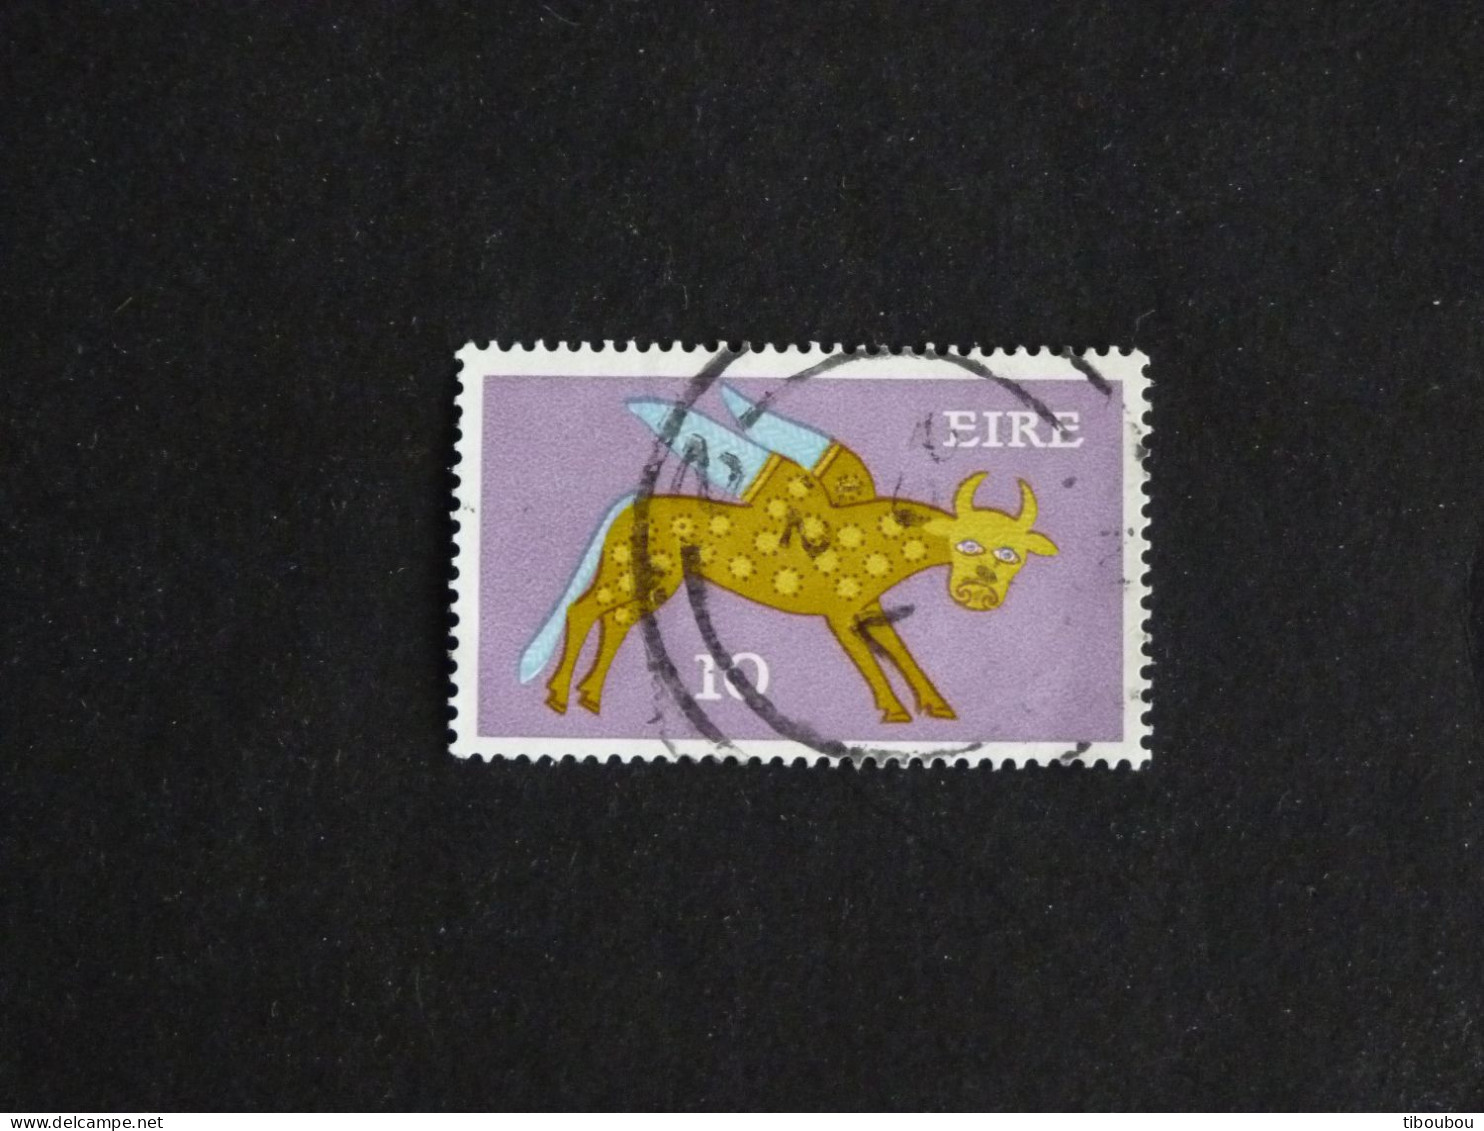 IRLANDE IRELAND EIRE YT 350A OBLITERE - BOEUF AILE SYMBOLE DE SAINT LUC - Used Stamps